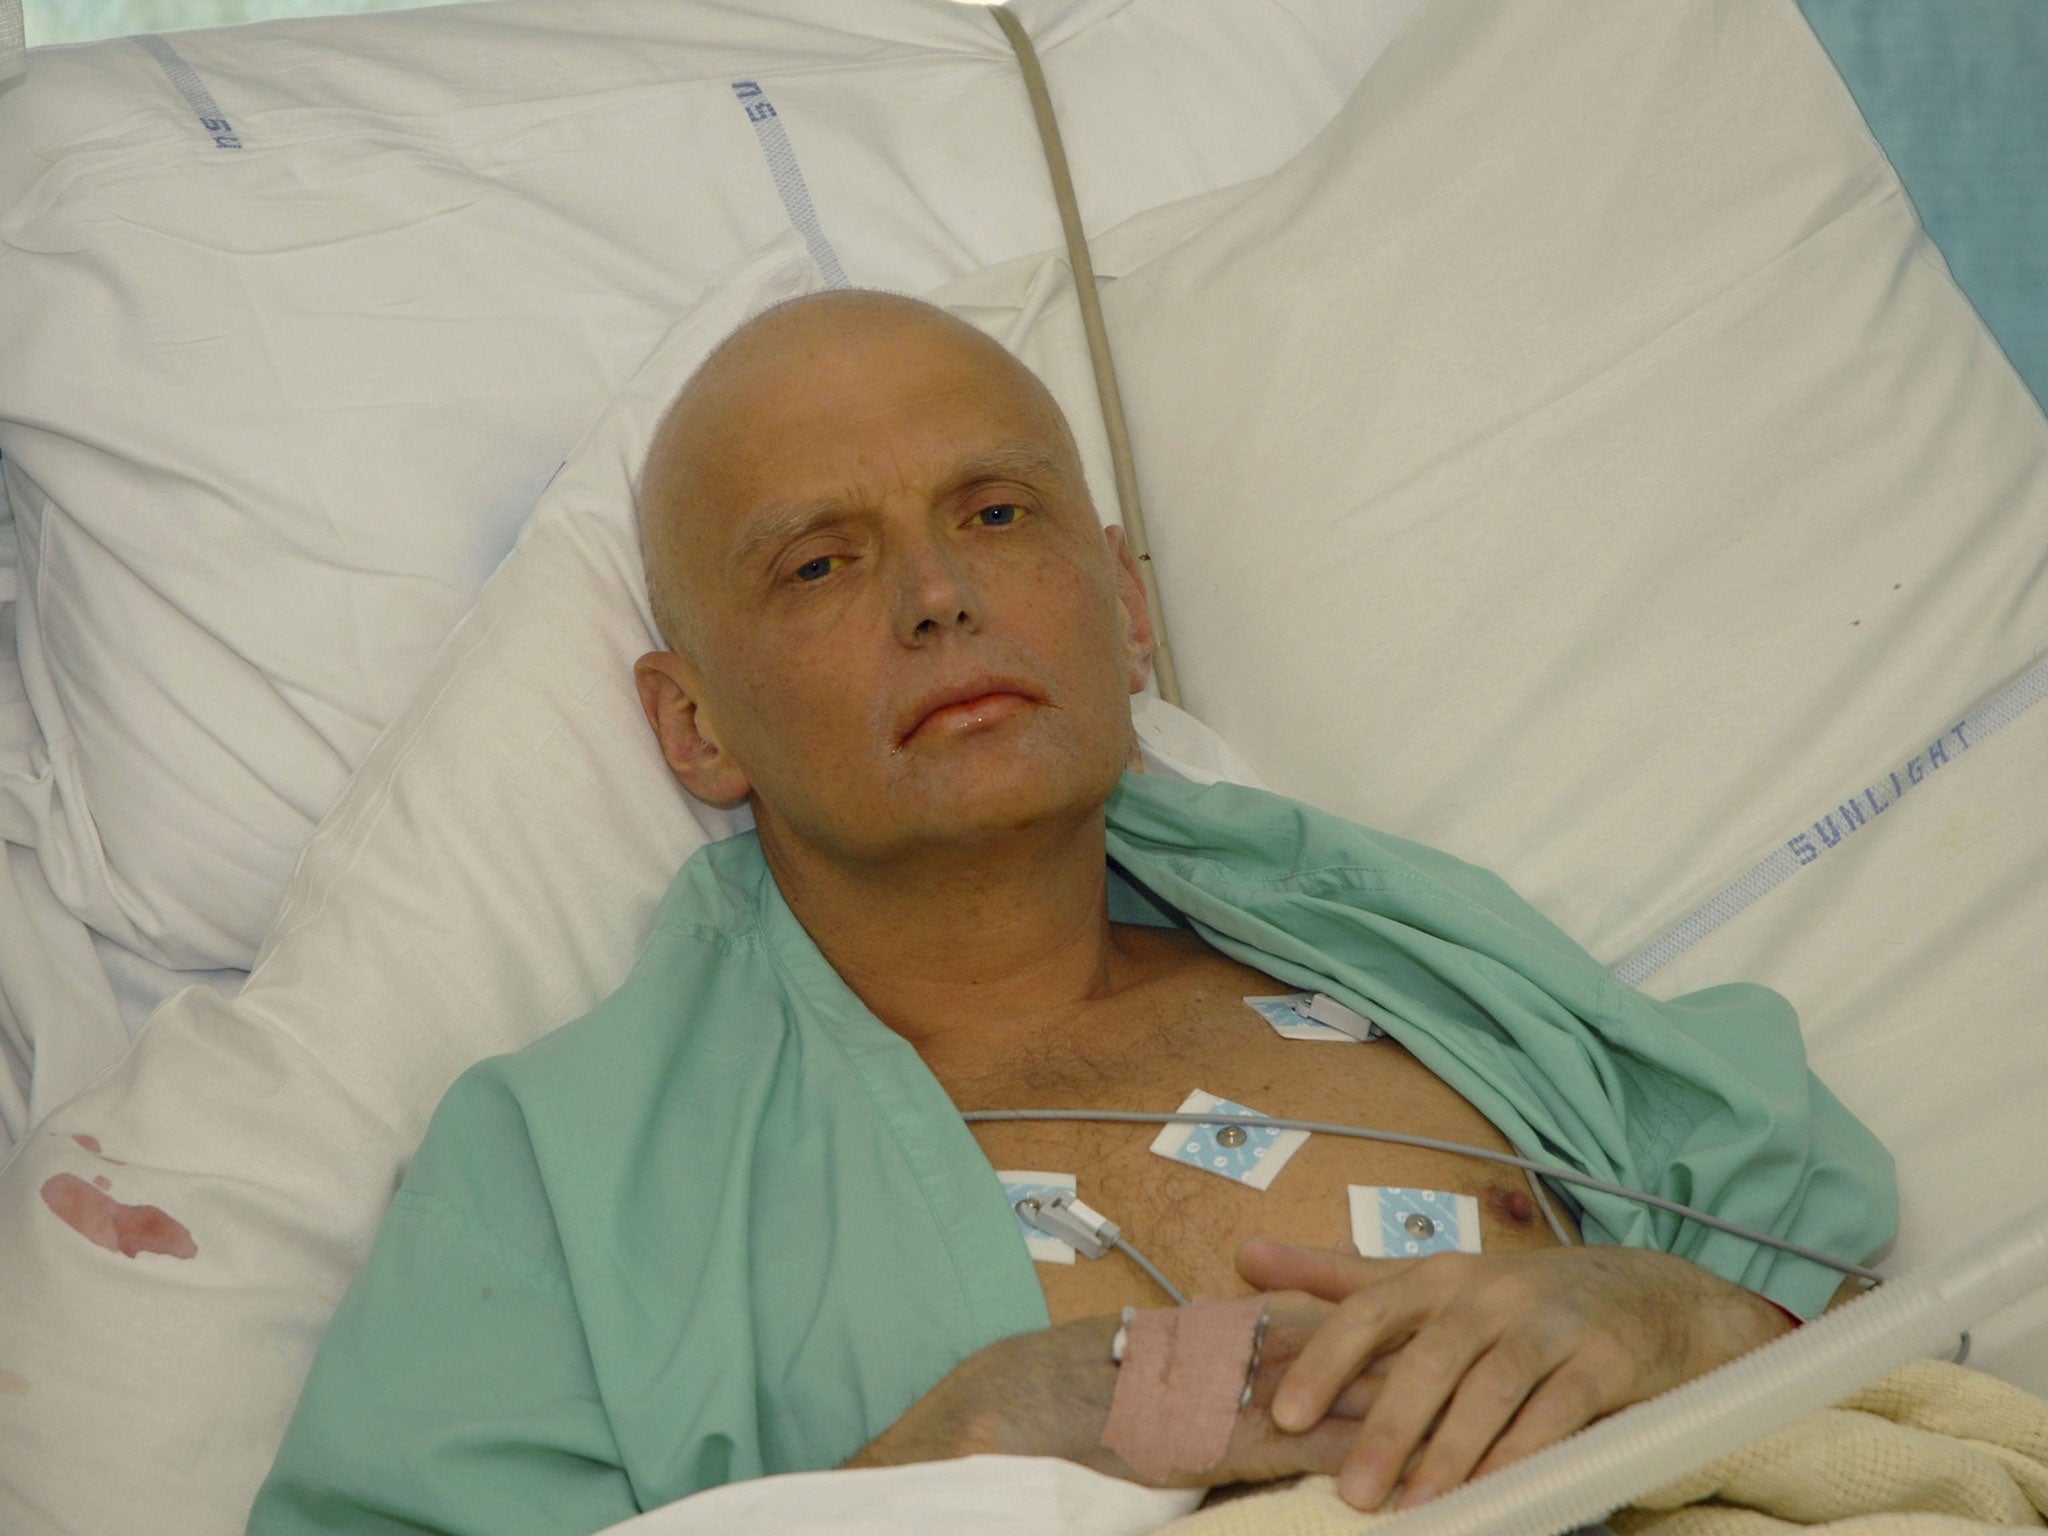 Alexander Litvinenko in the intensive care unit of University College Hospital in London